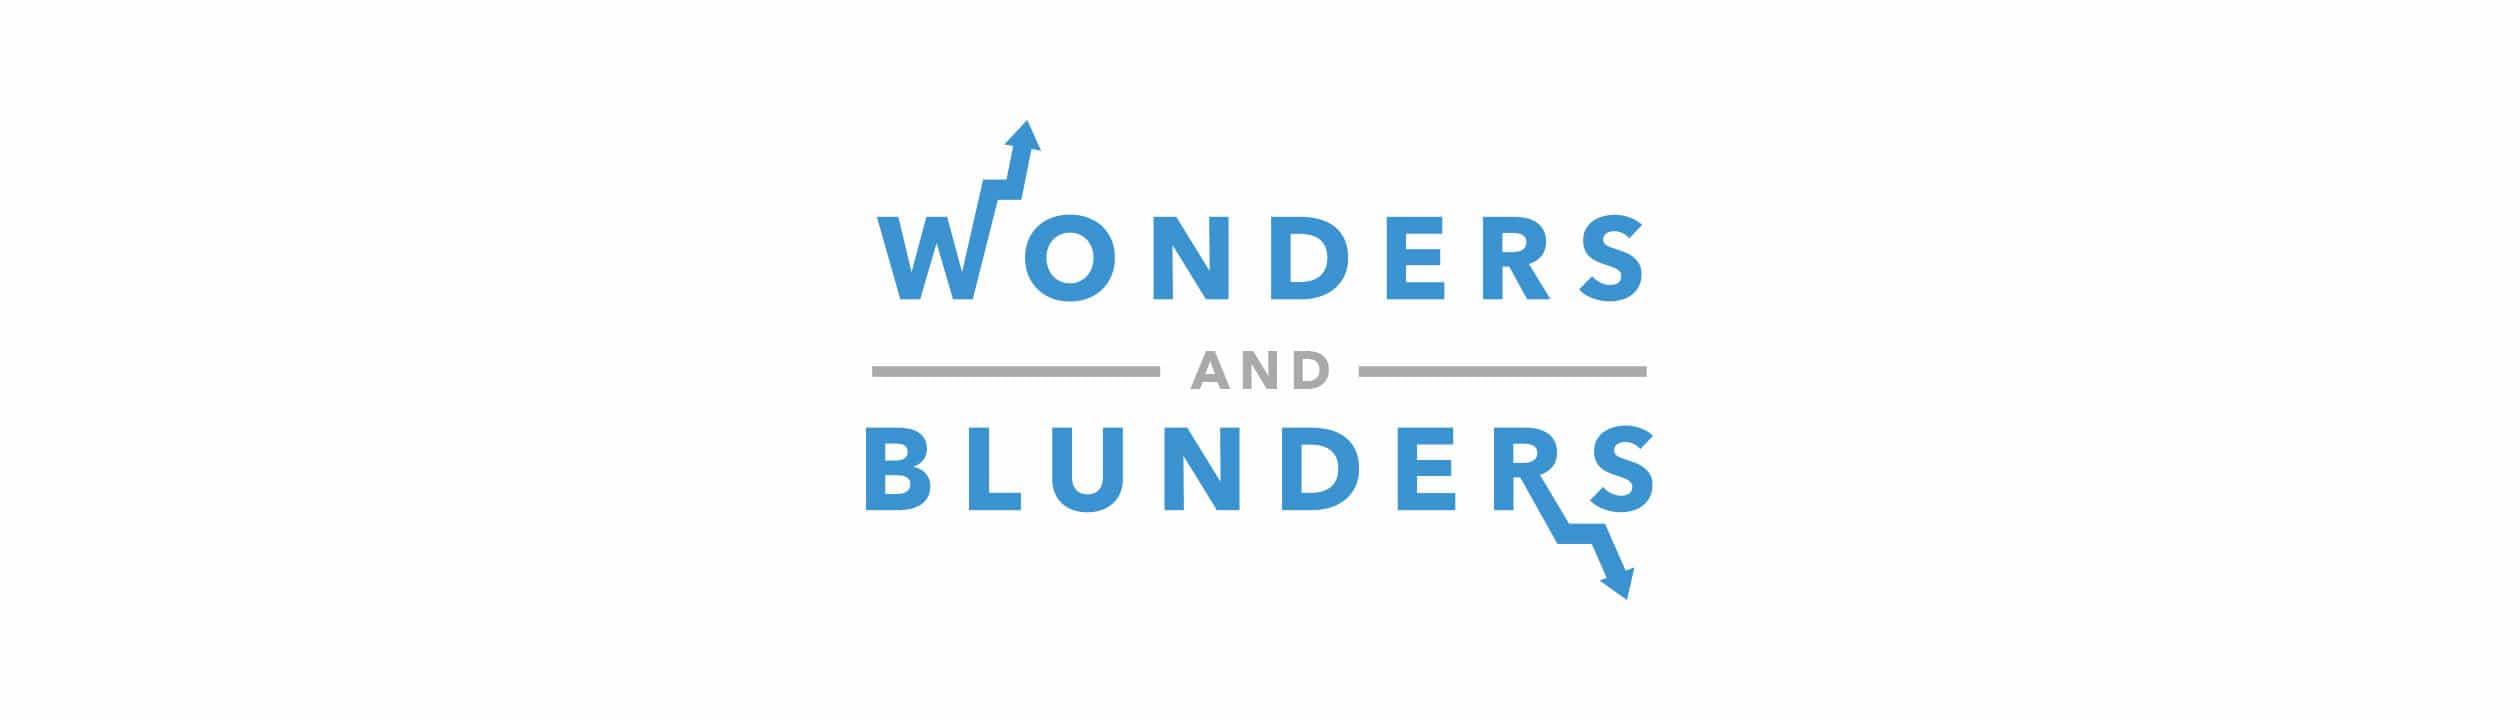 Wonders & Blunders: Good News Rippling Through the Philanthropy World